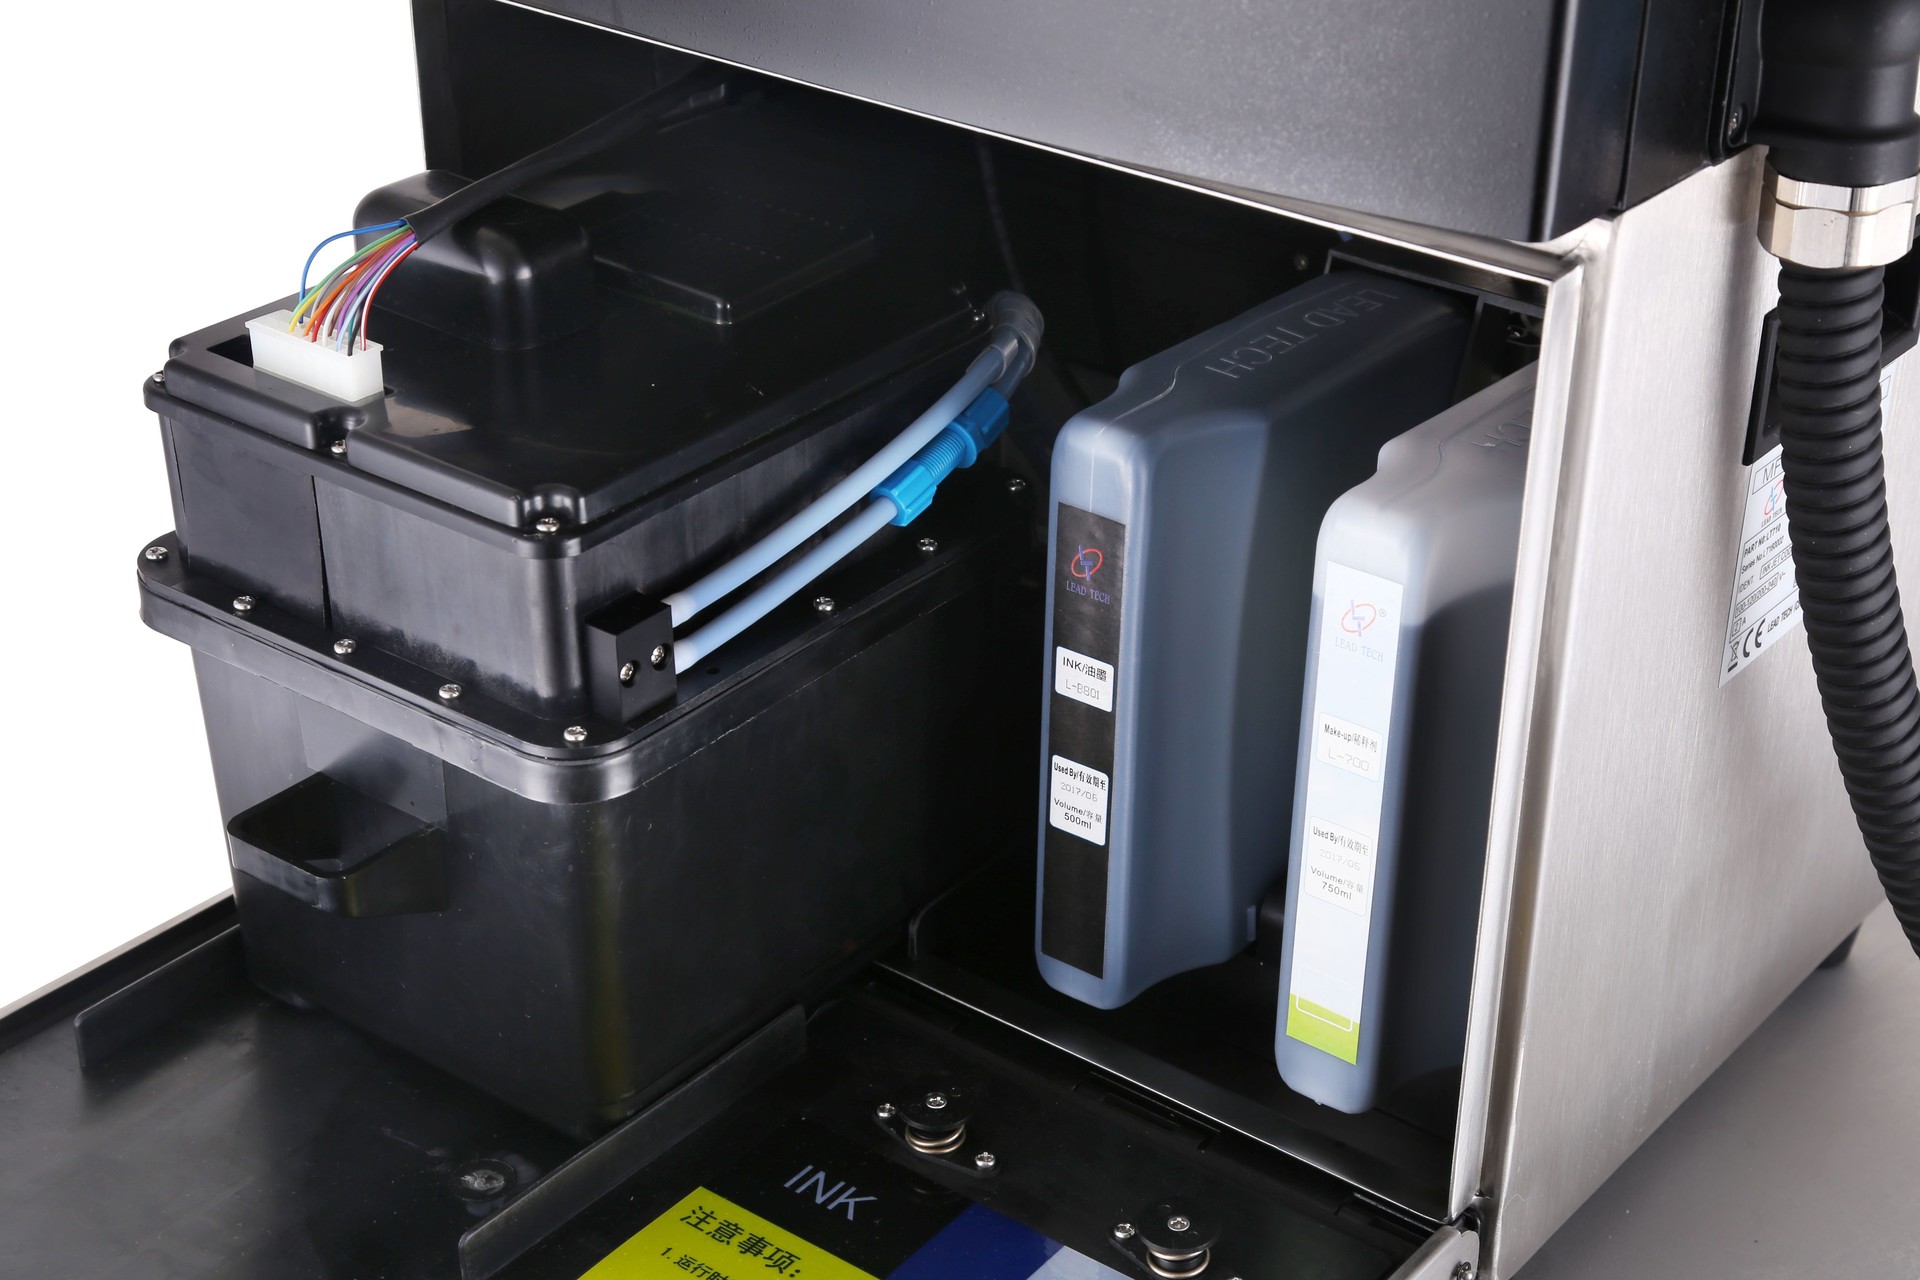 Lead Tech Lt710 Cij Inkjet Printer for Moving Head Printing